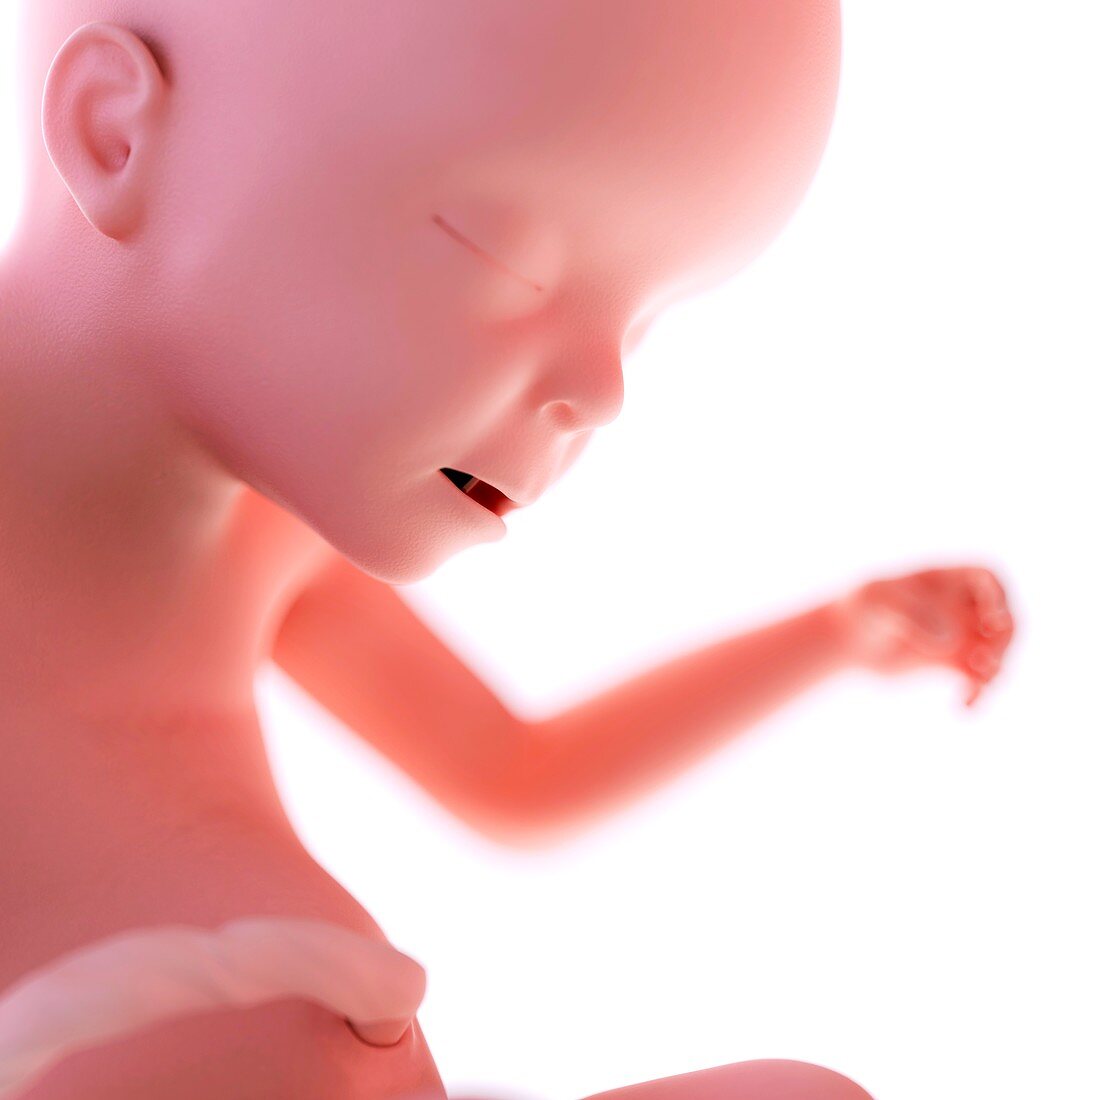 Human fetus age 23 weeks